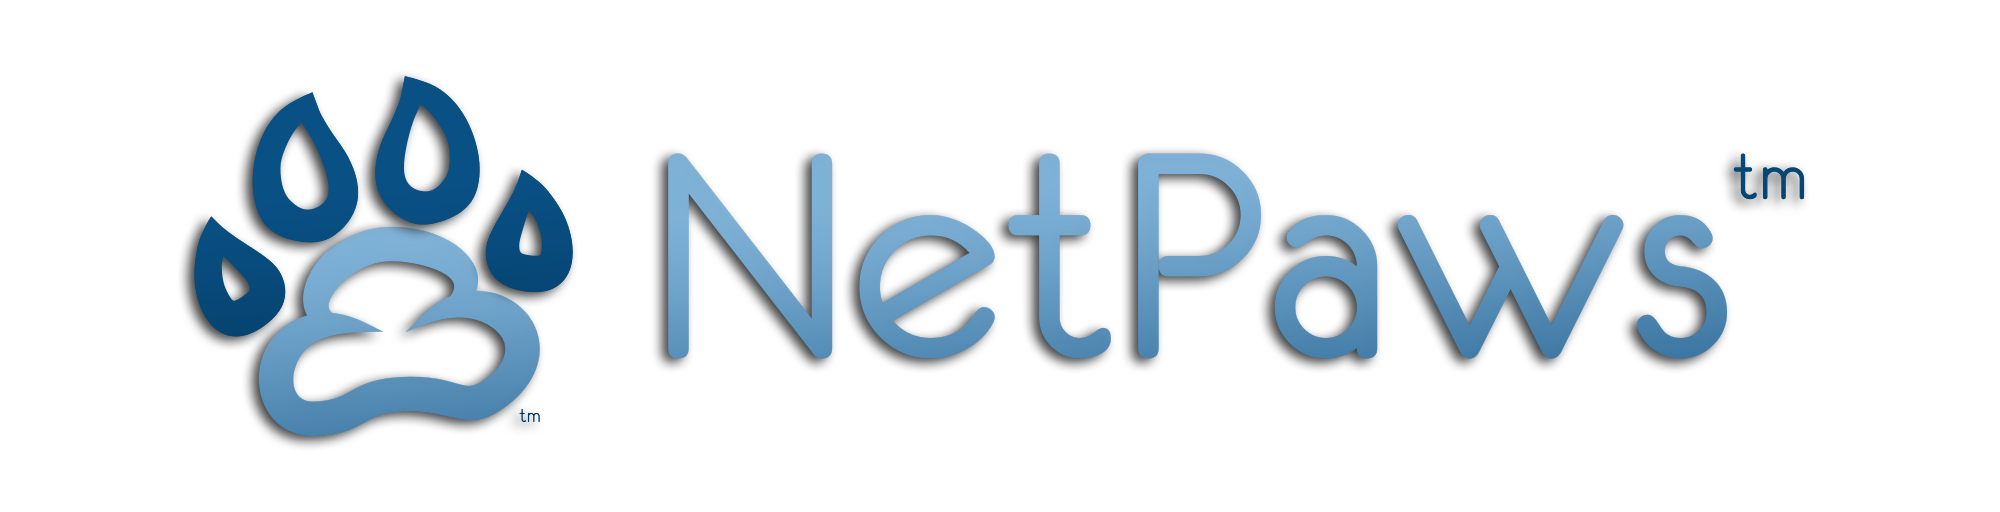 NetPaws Logo